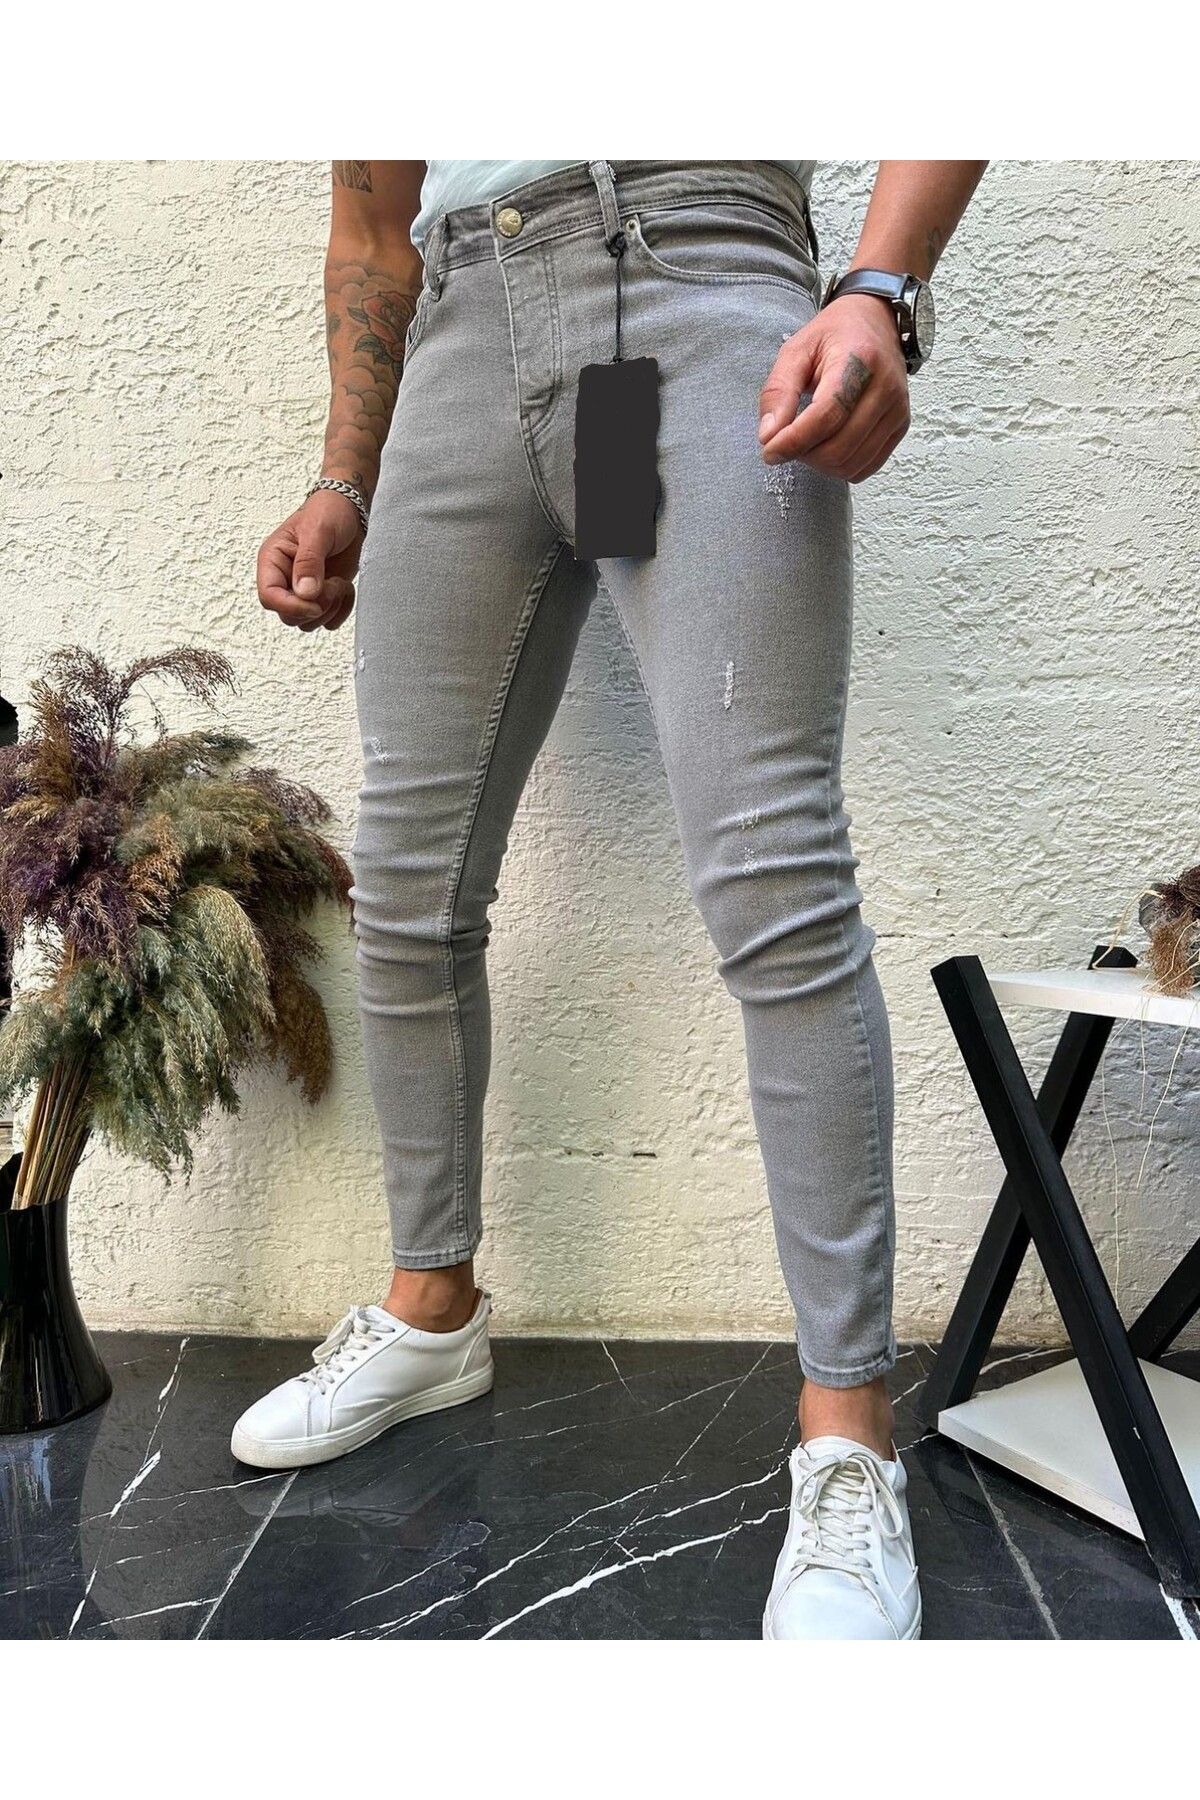 Spring Black Cargo Pants Mens Skinny Stretch Denim Distressed Ripped Freyed  Slim Fit Jeans Trousers - Walmart.com